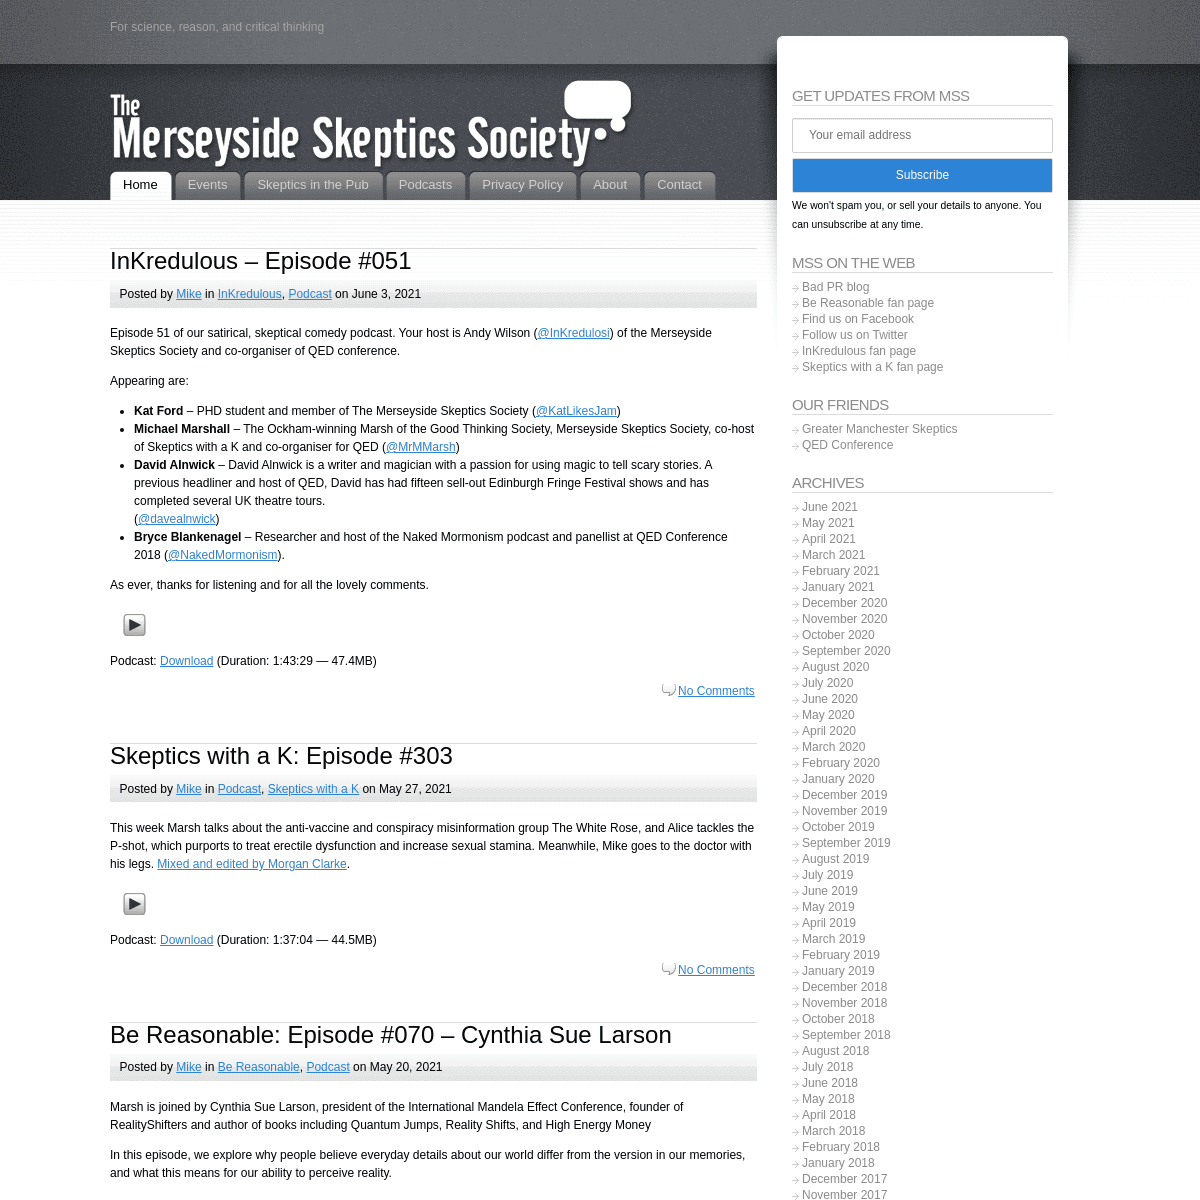 A complete backup of https://merseysideskeptics.org.uk